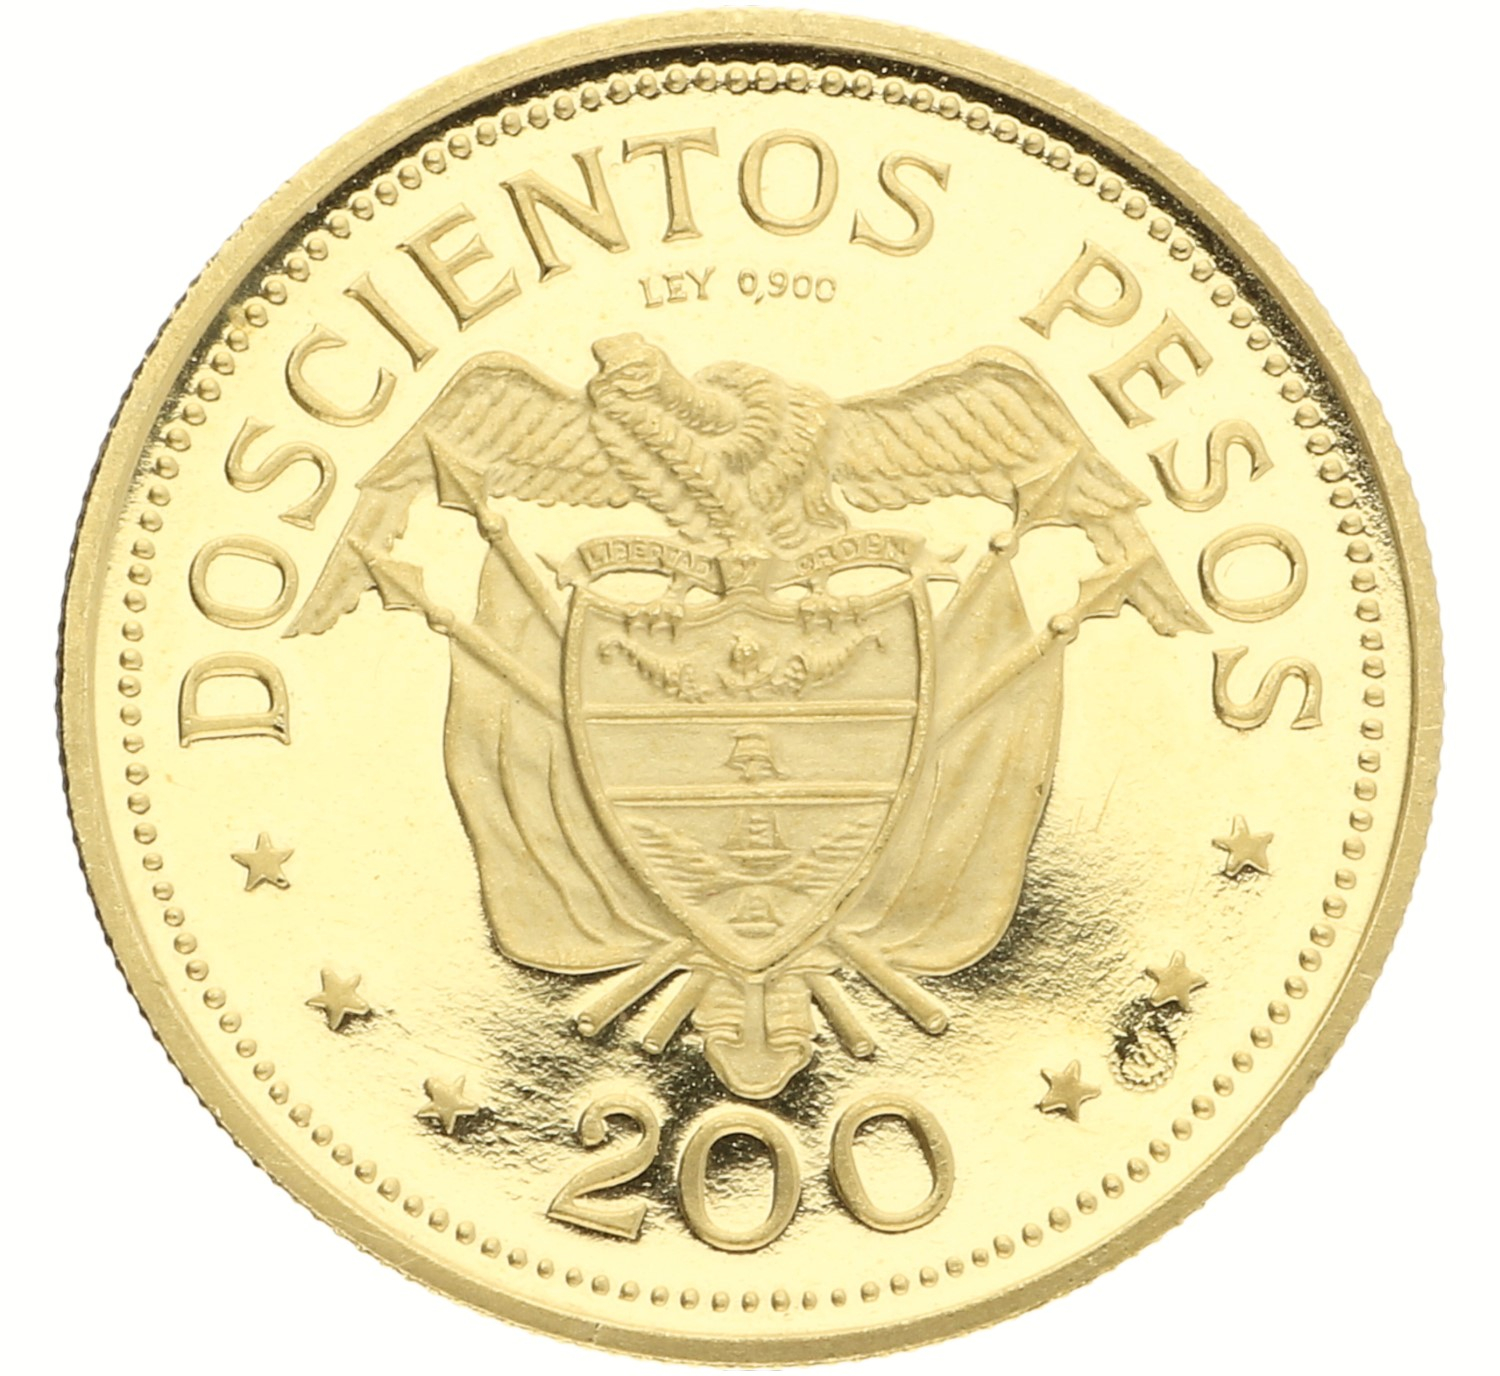 200 Pesos - Colombia - 1968